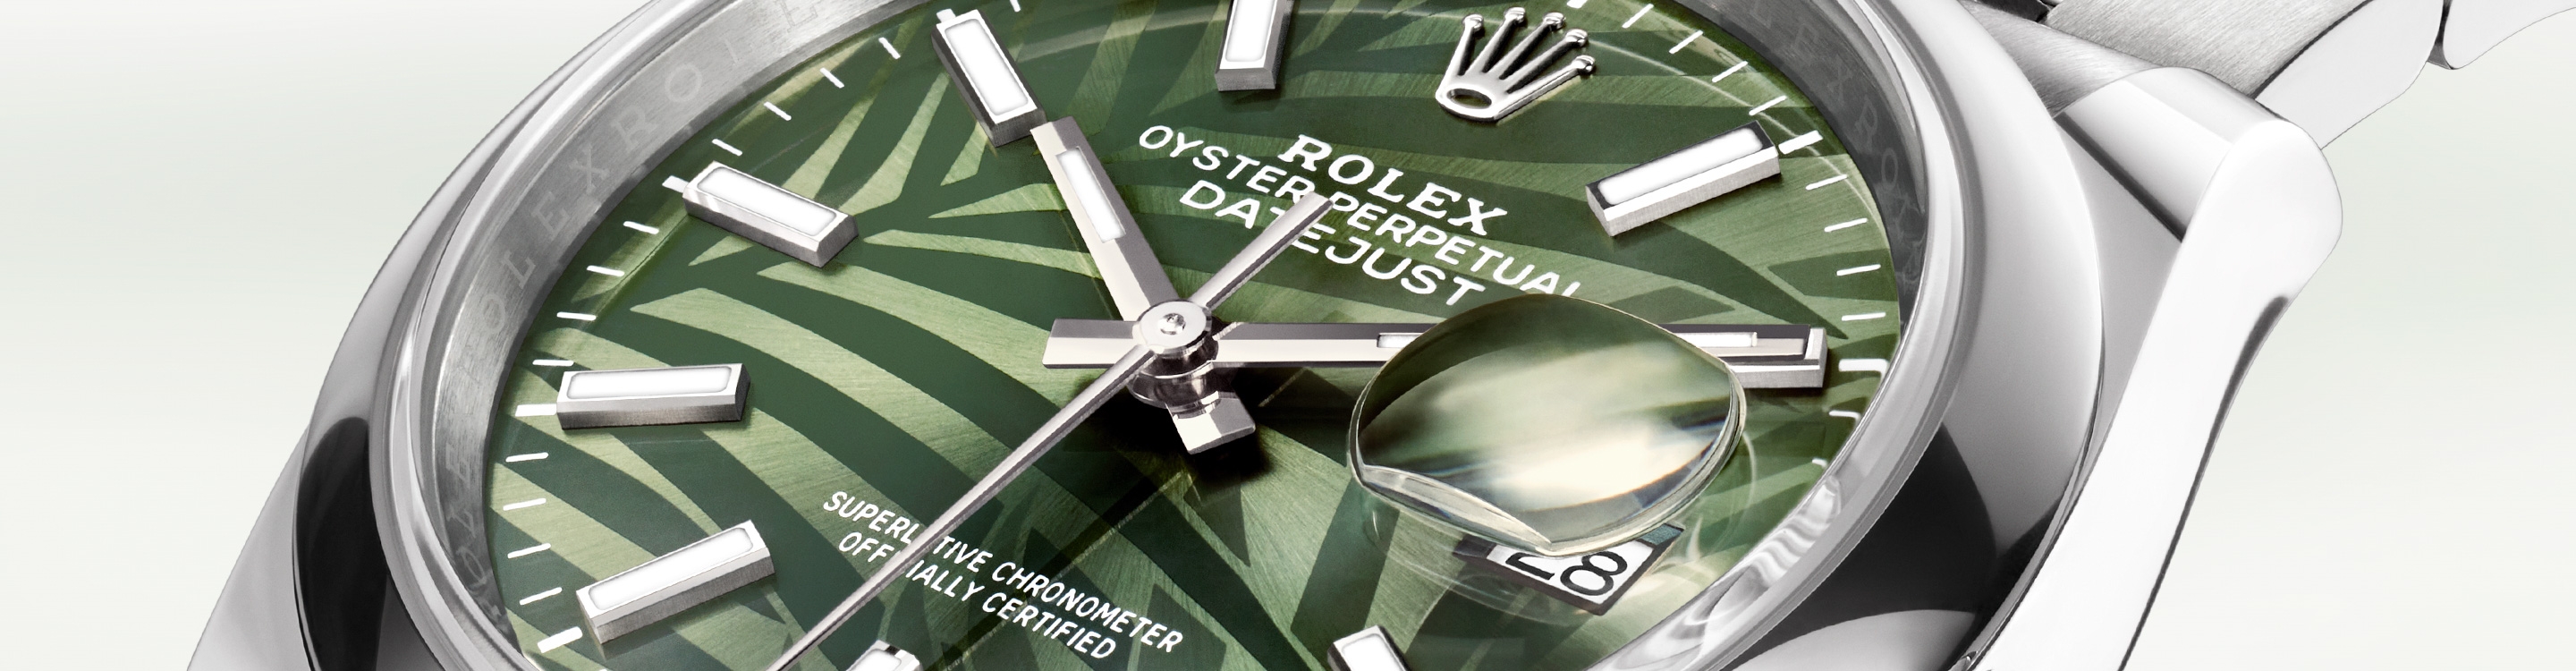 Rolex Datejust in Oystersteel, M126300-0018 | Europe Watch Company